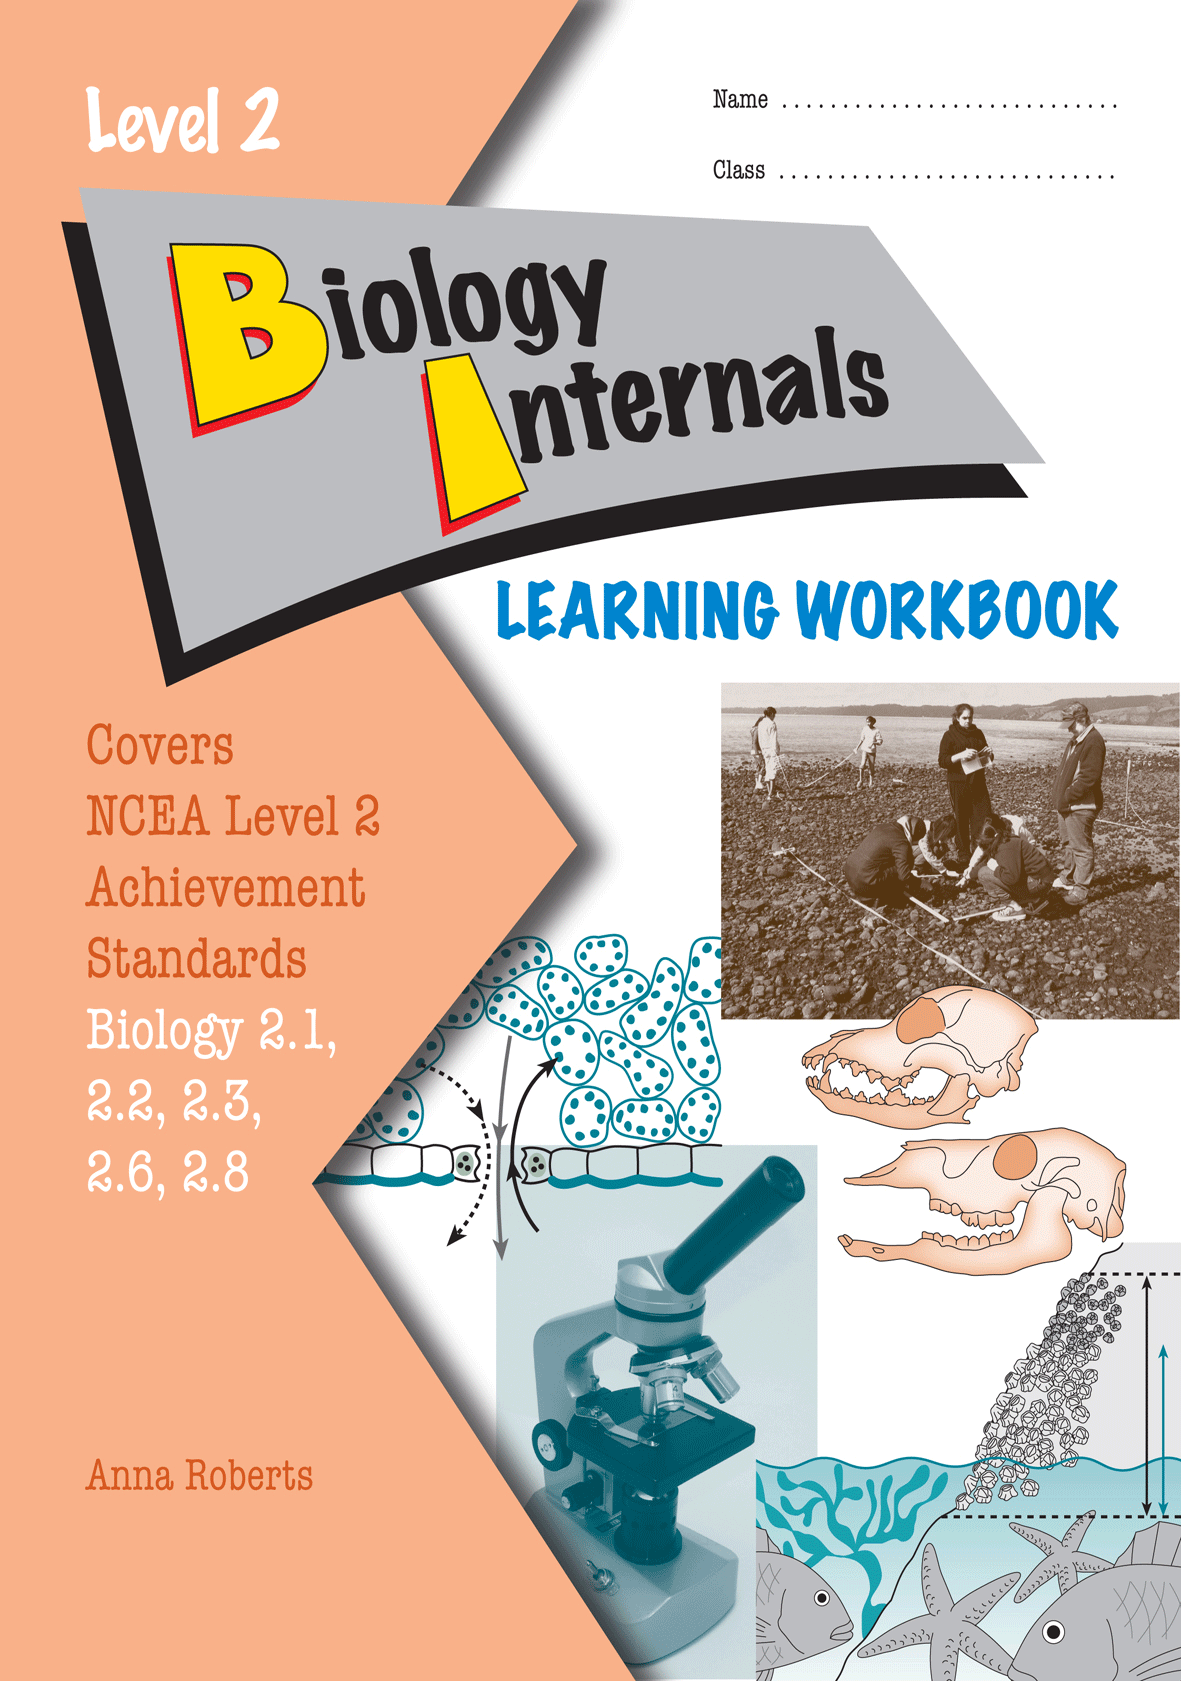 Level 2 Biology Internals Learning Workbook